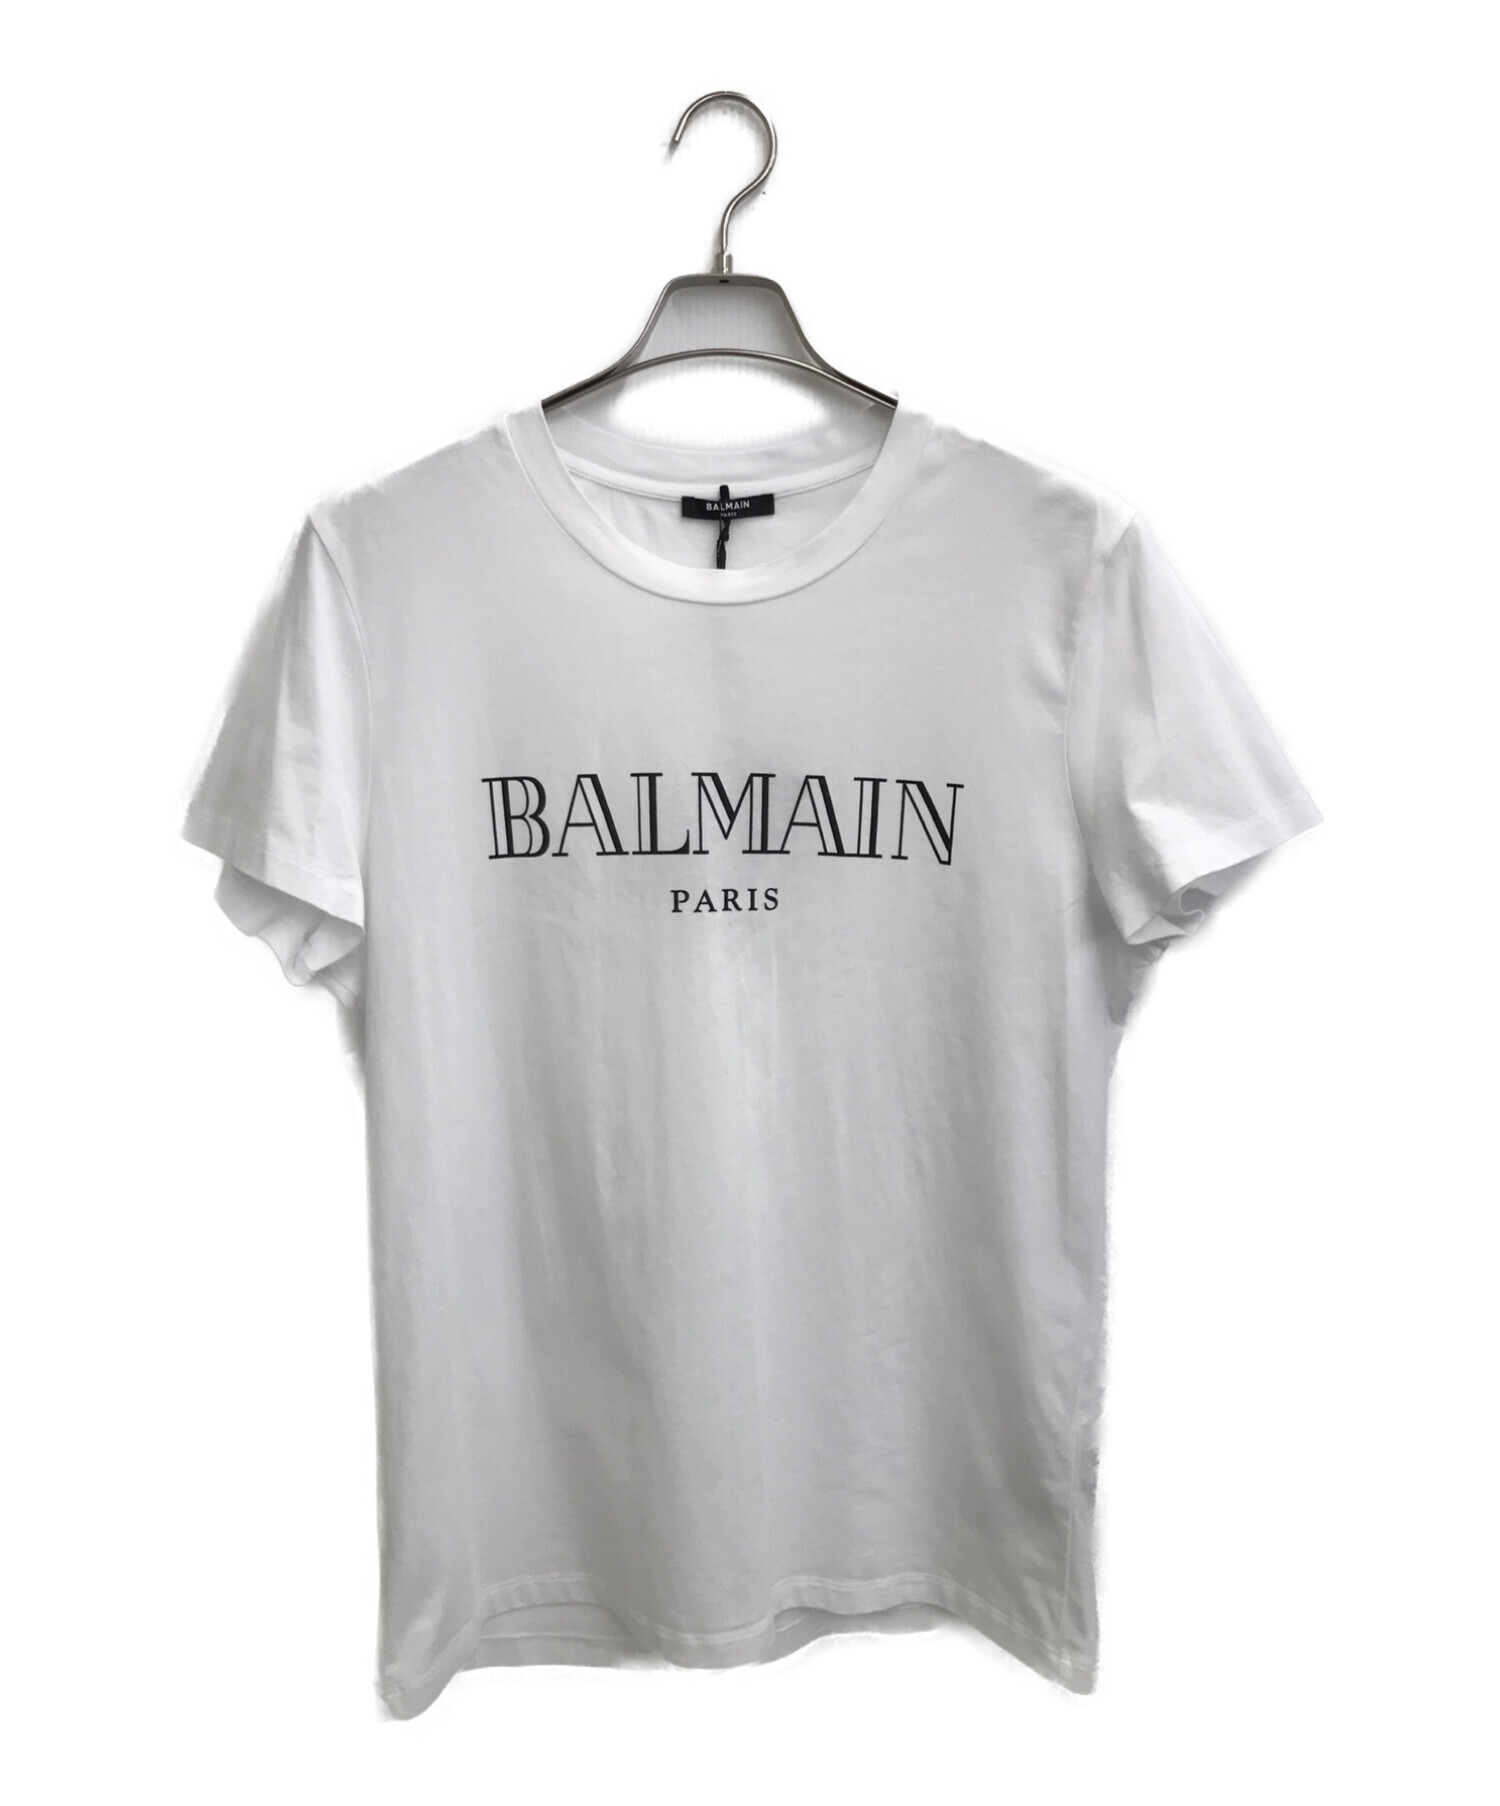 BALMAIN(バルマン) サイズ:XS JOINT THE BALMAIN ARMY ロゴプリント